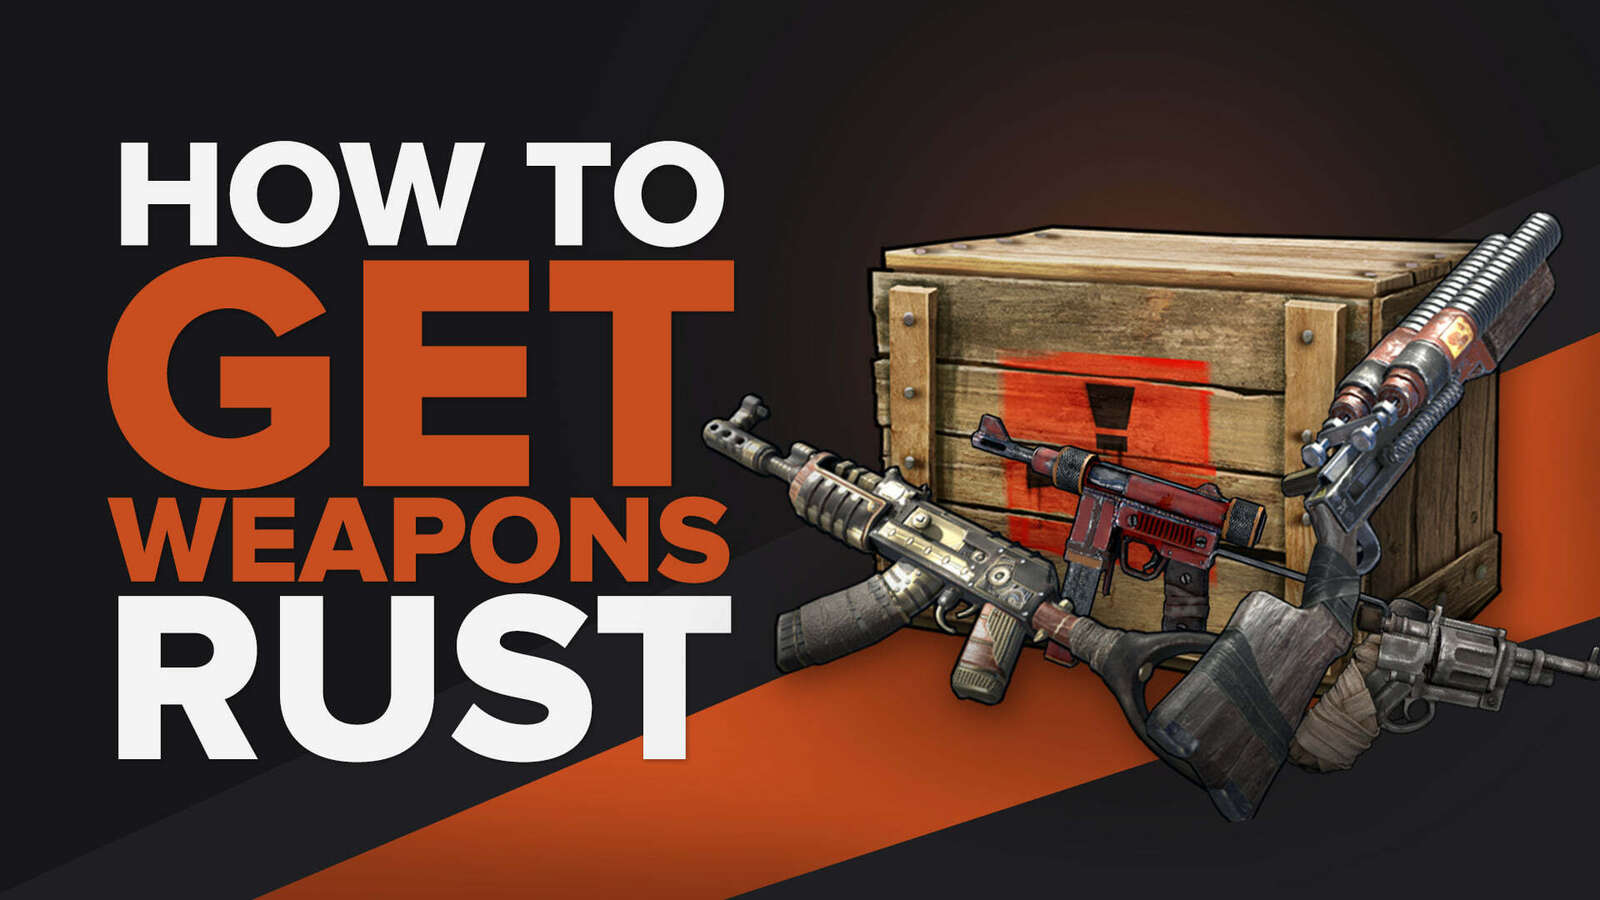 How to Find Weapons in Rust (Best Methods)